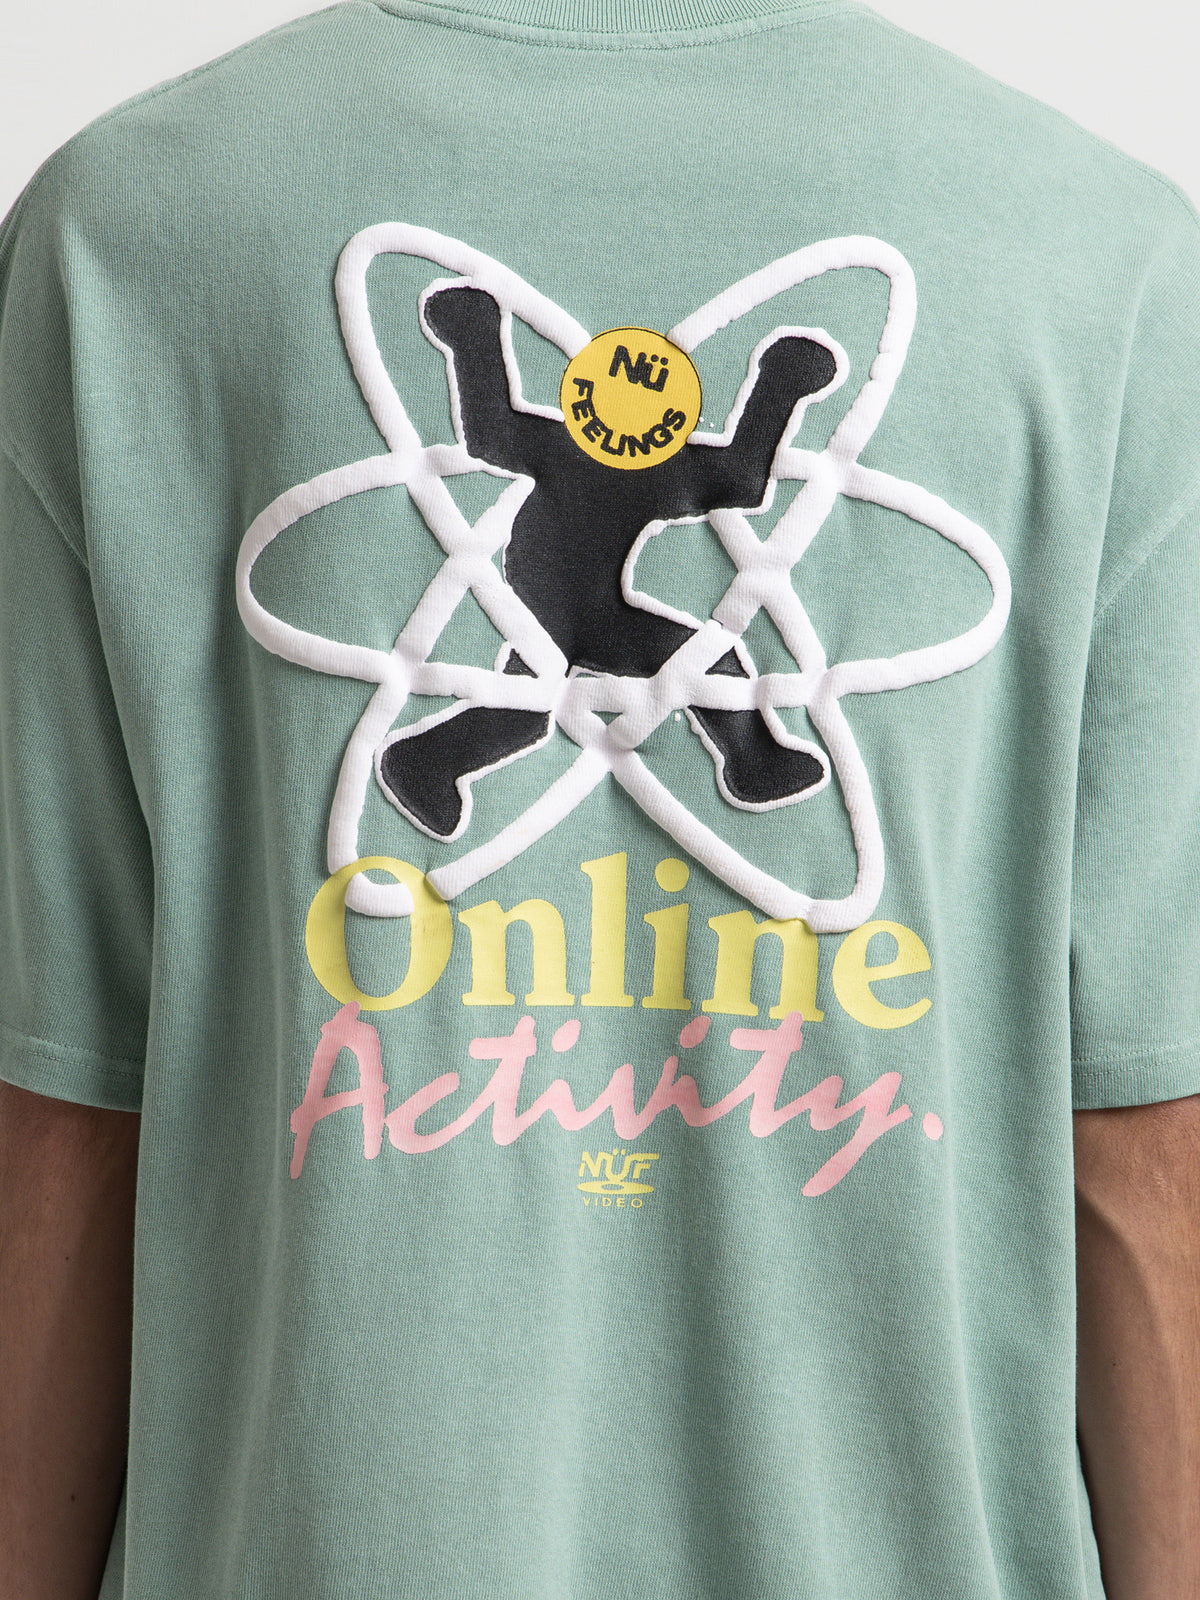 Online Activity T-Shirt in Sage Green Overdye